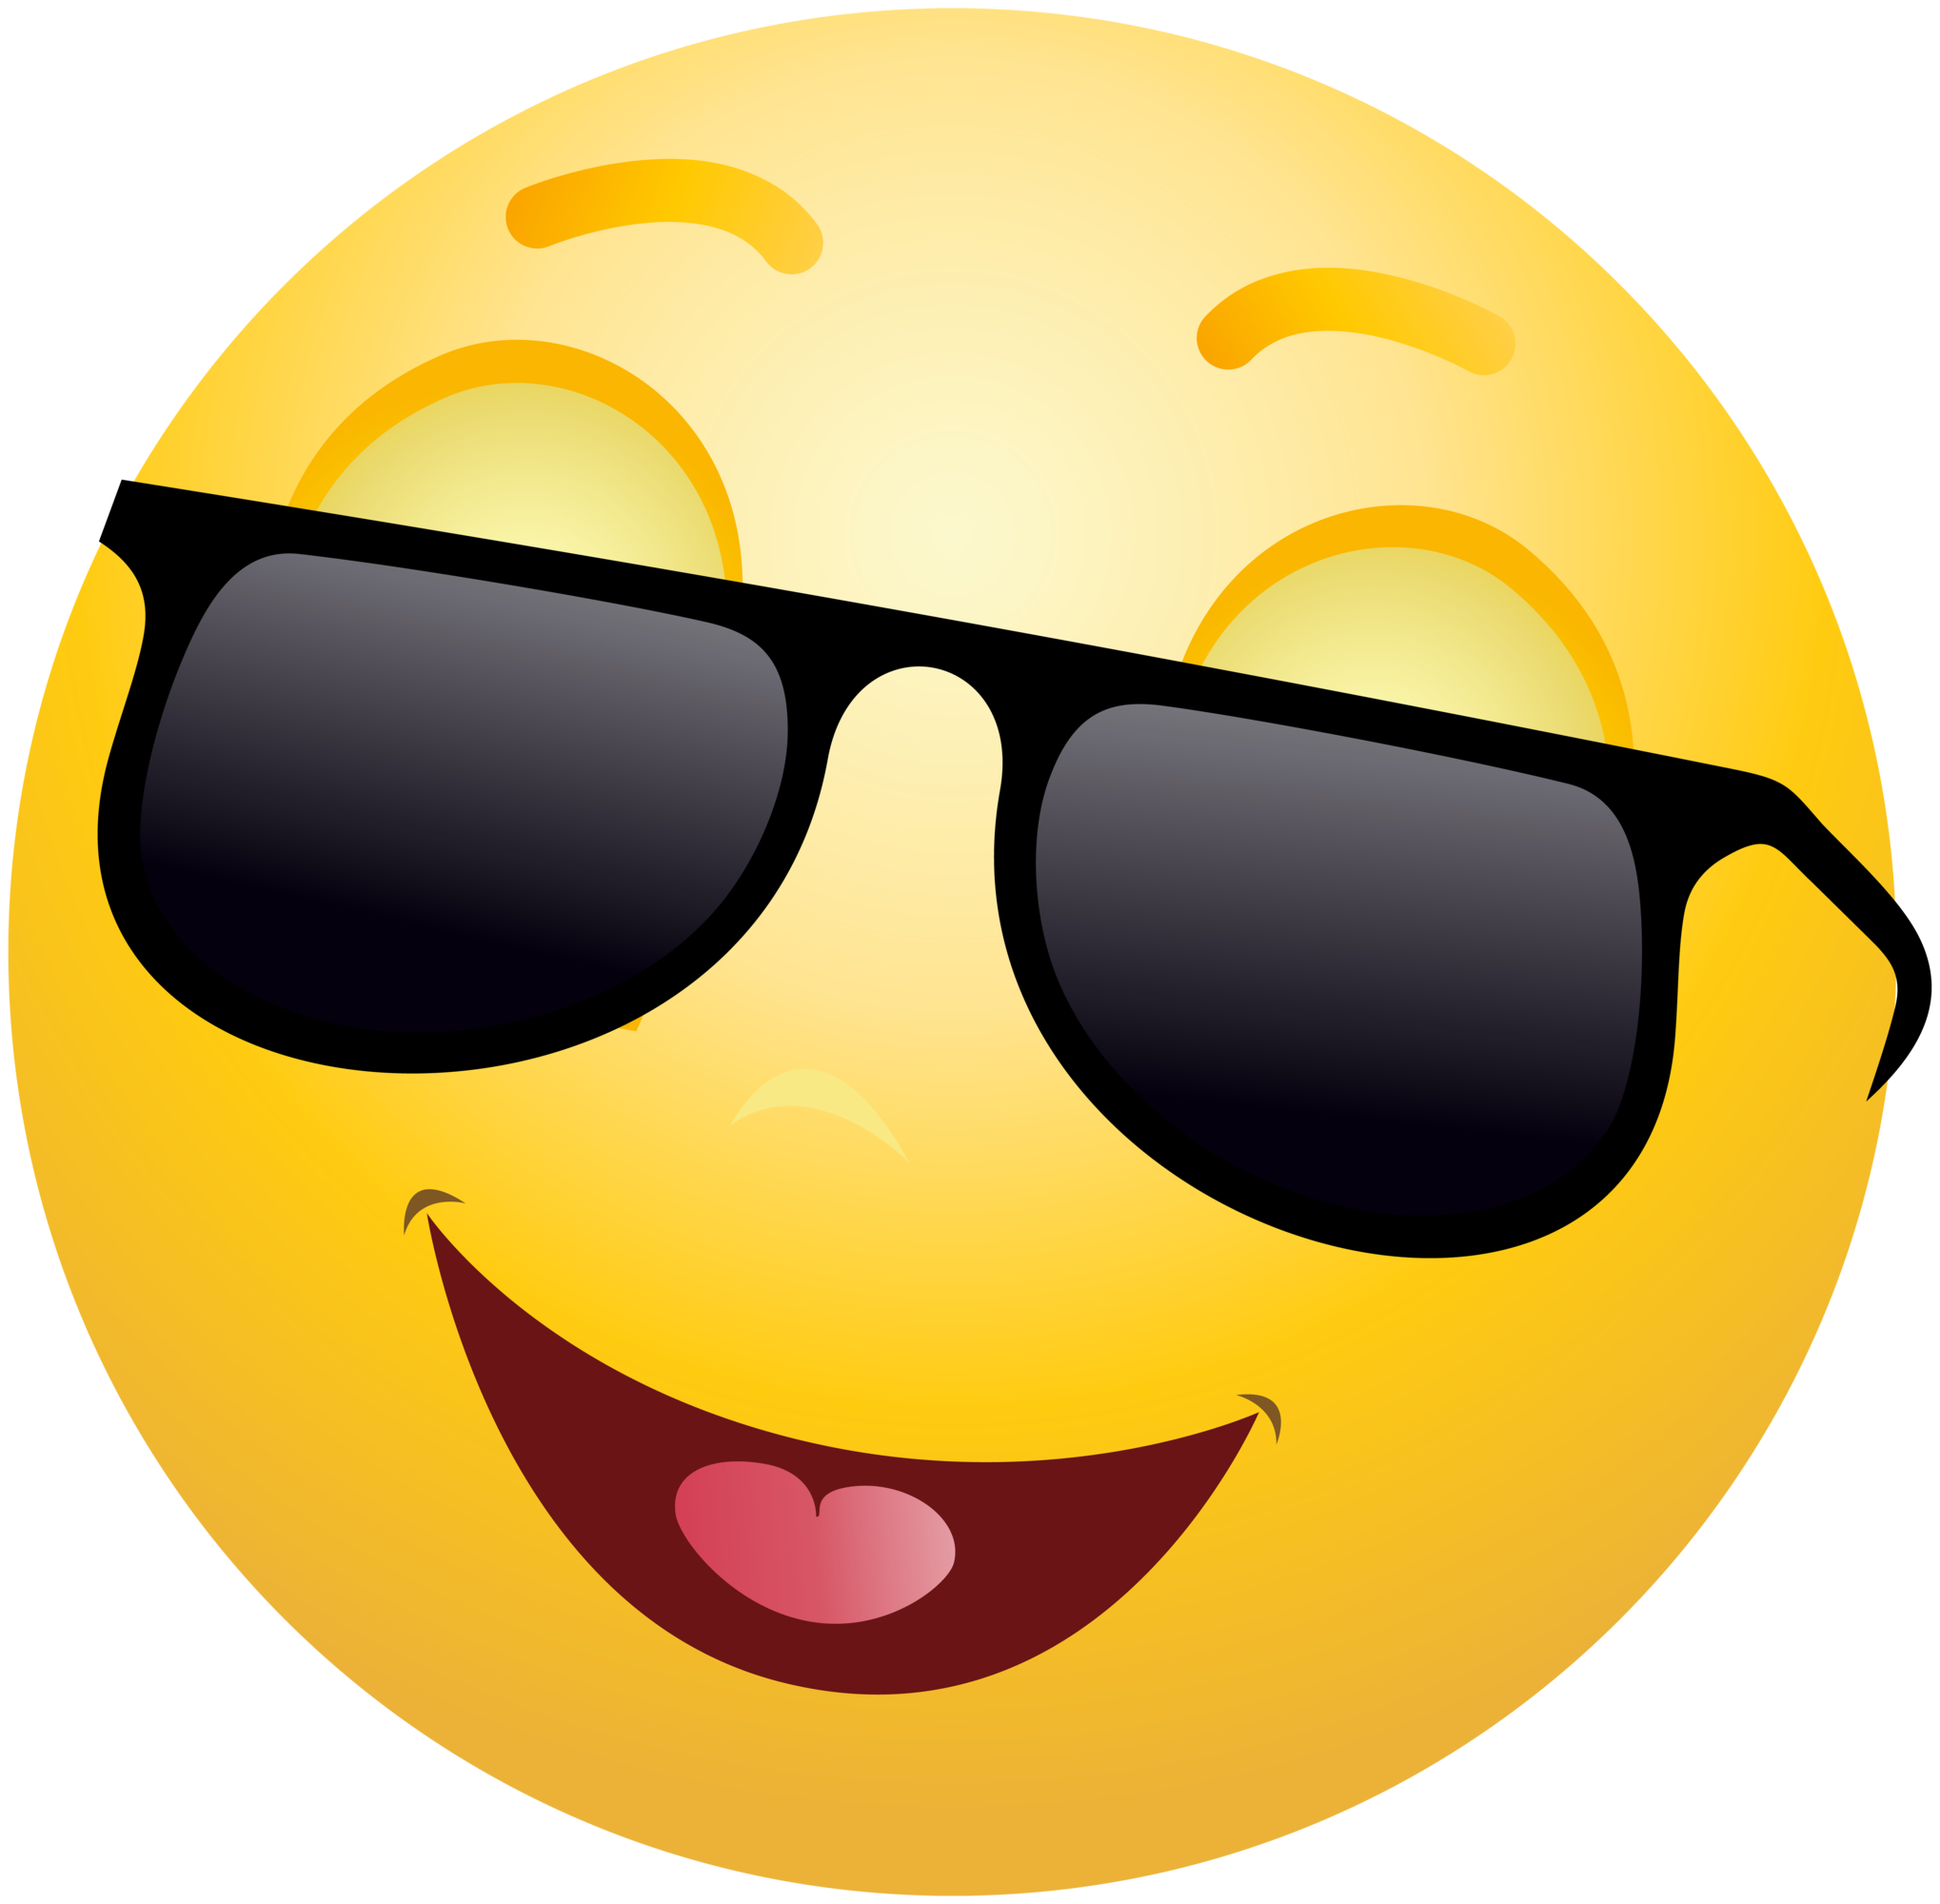 Download Emoticon Smiley Sunglasses Faces Emoji Free Photo